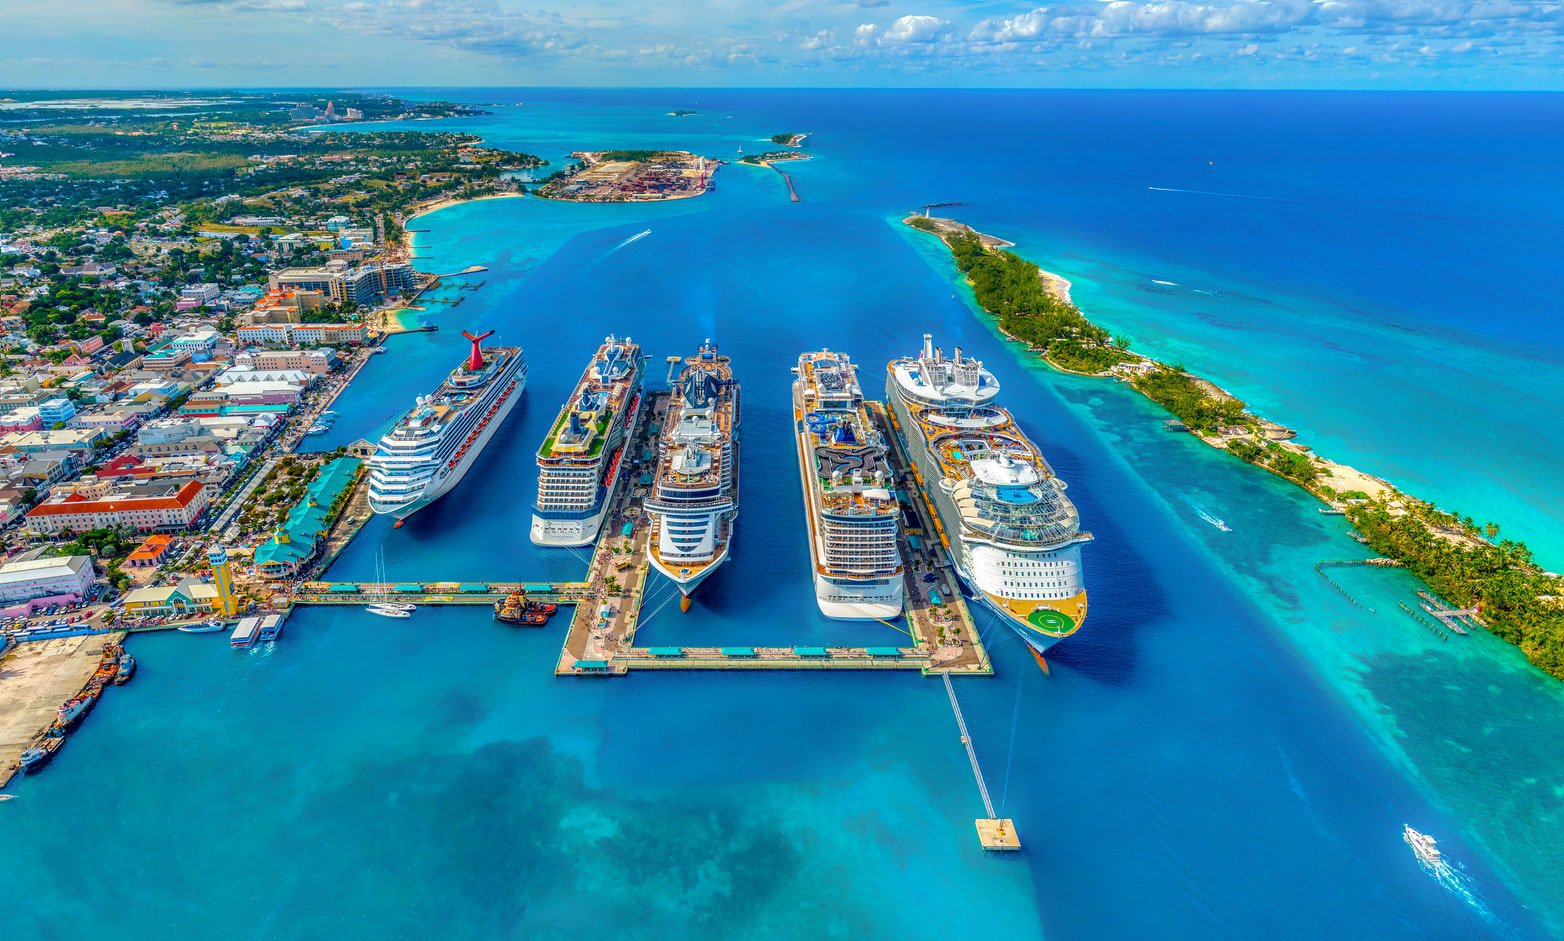 The Bahamas tax free country